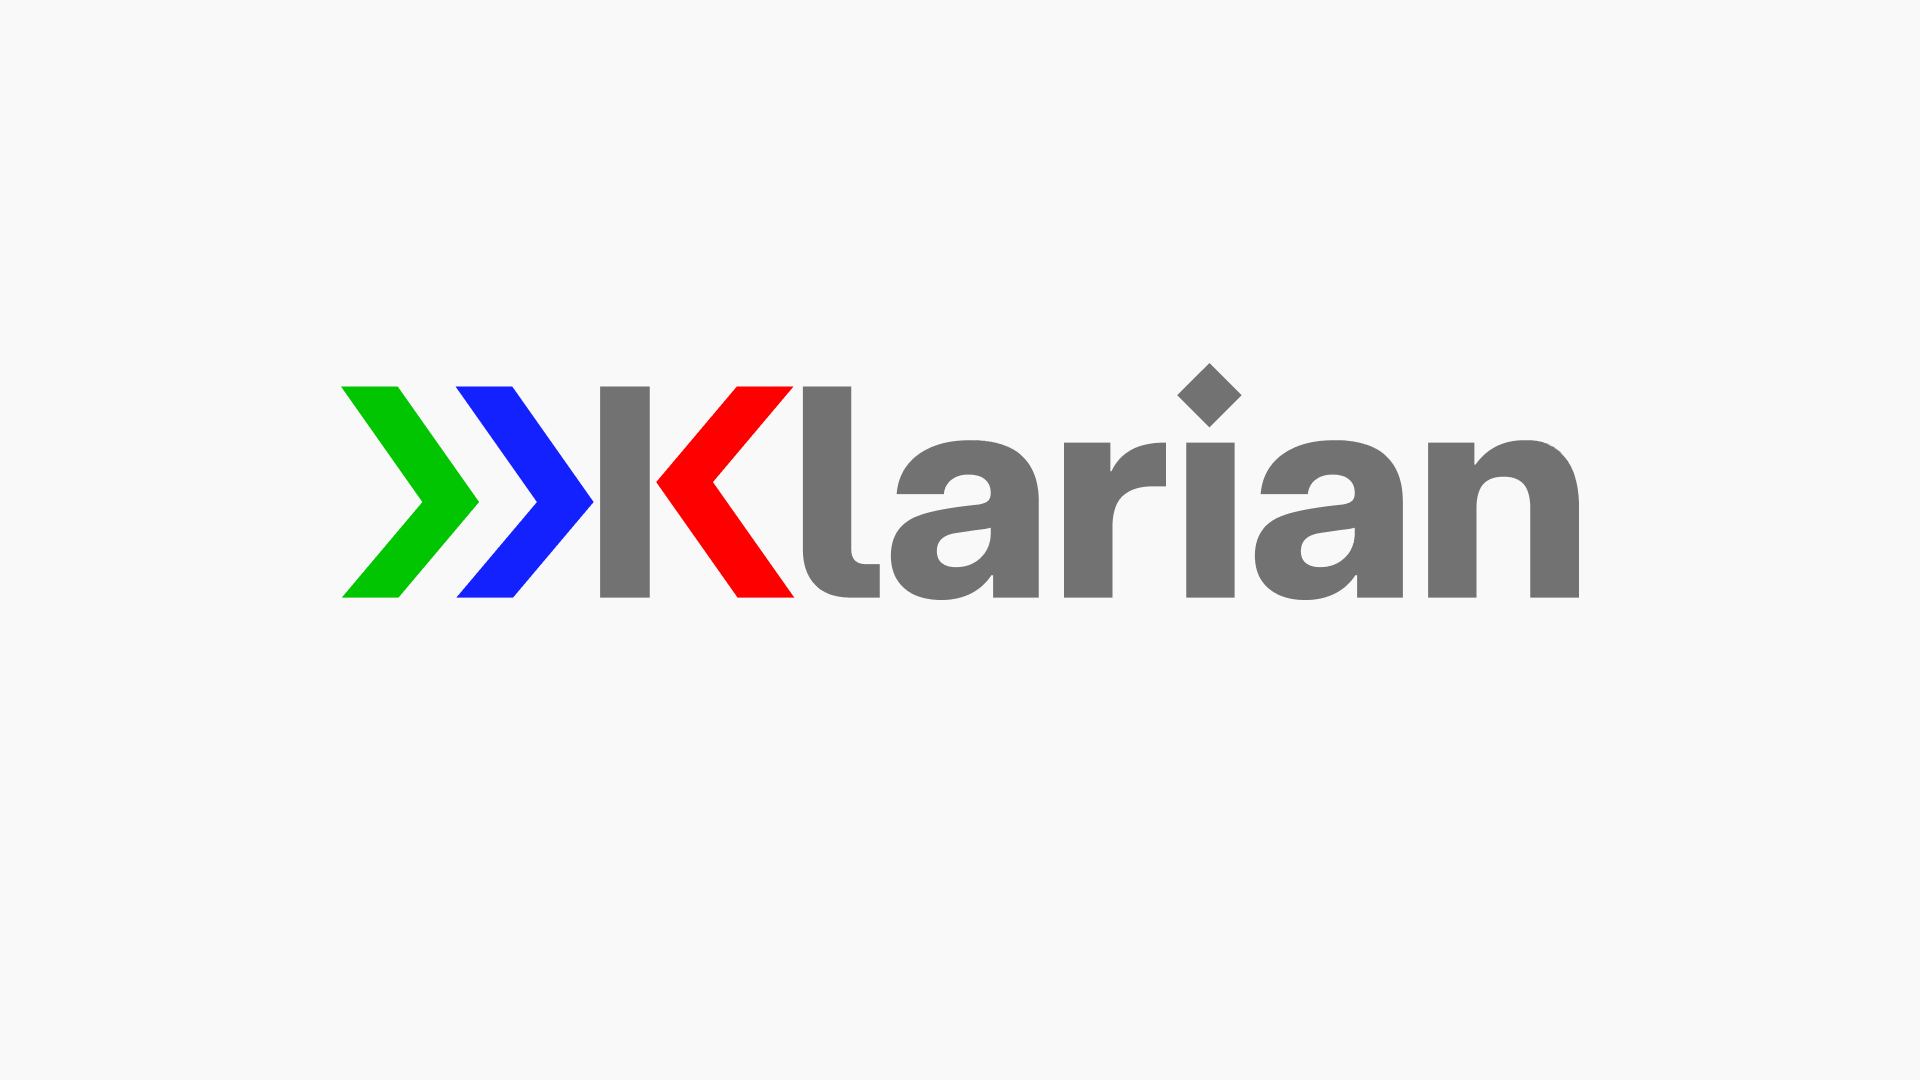 Klarian — Font modification